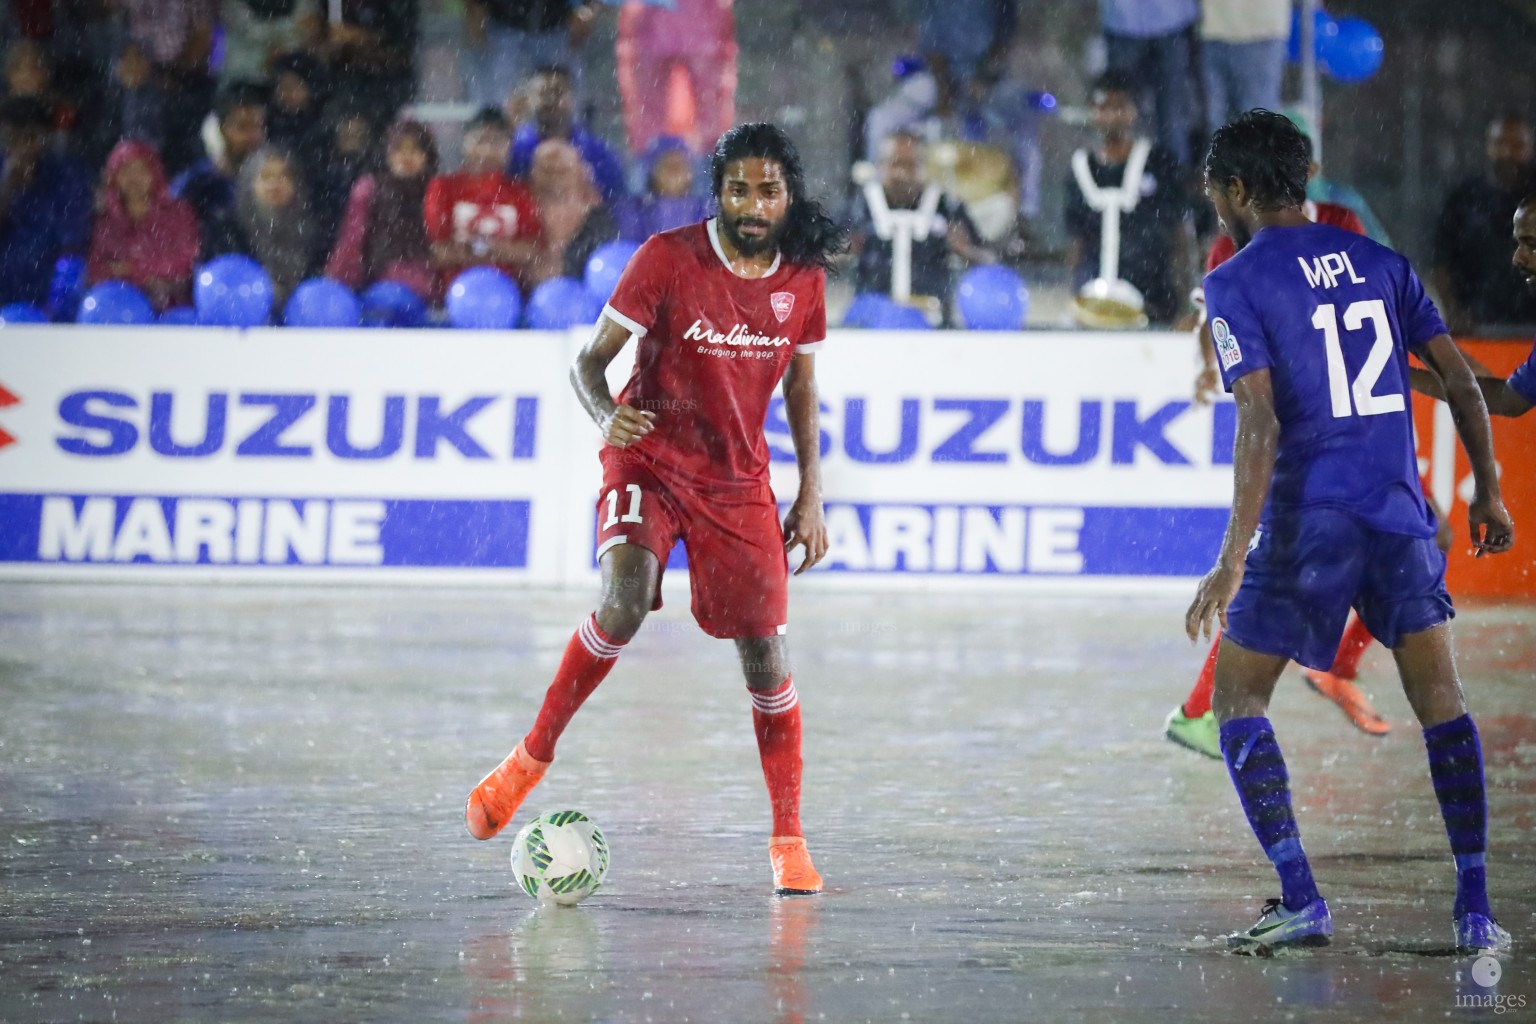 Club Maldives 2018 / Semi Final (Maldivian vs MPL)